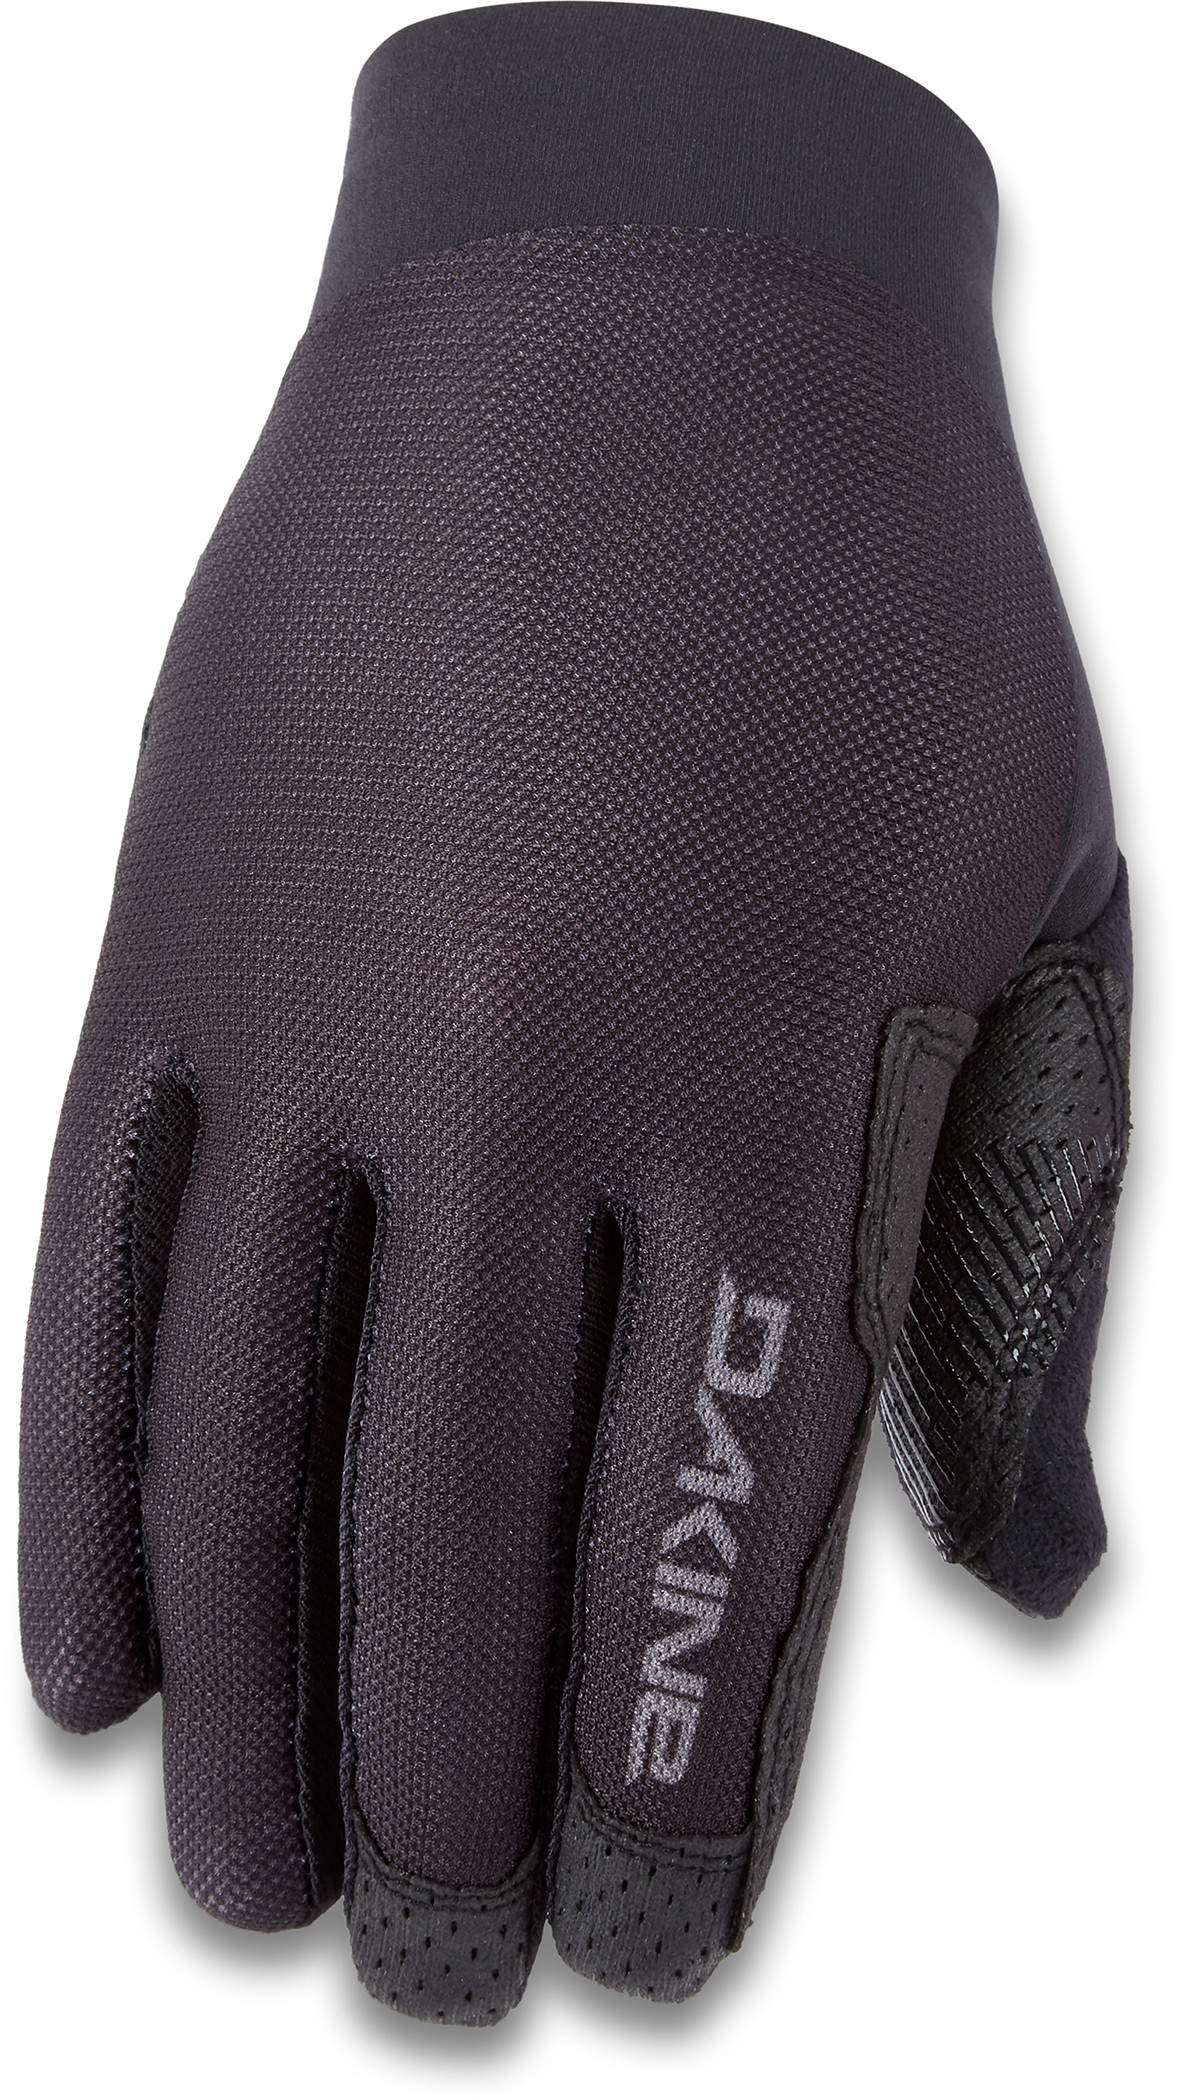 Vectra Bike Glove